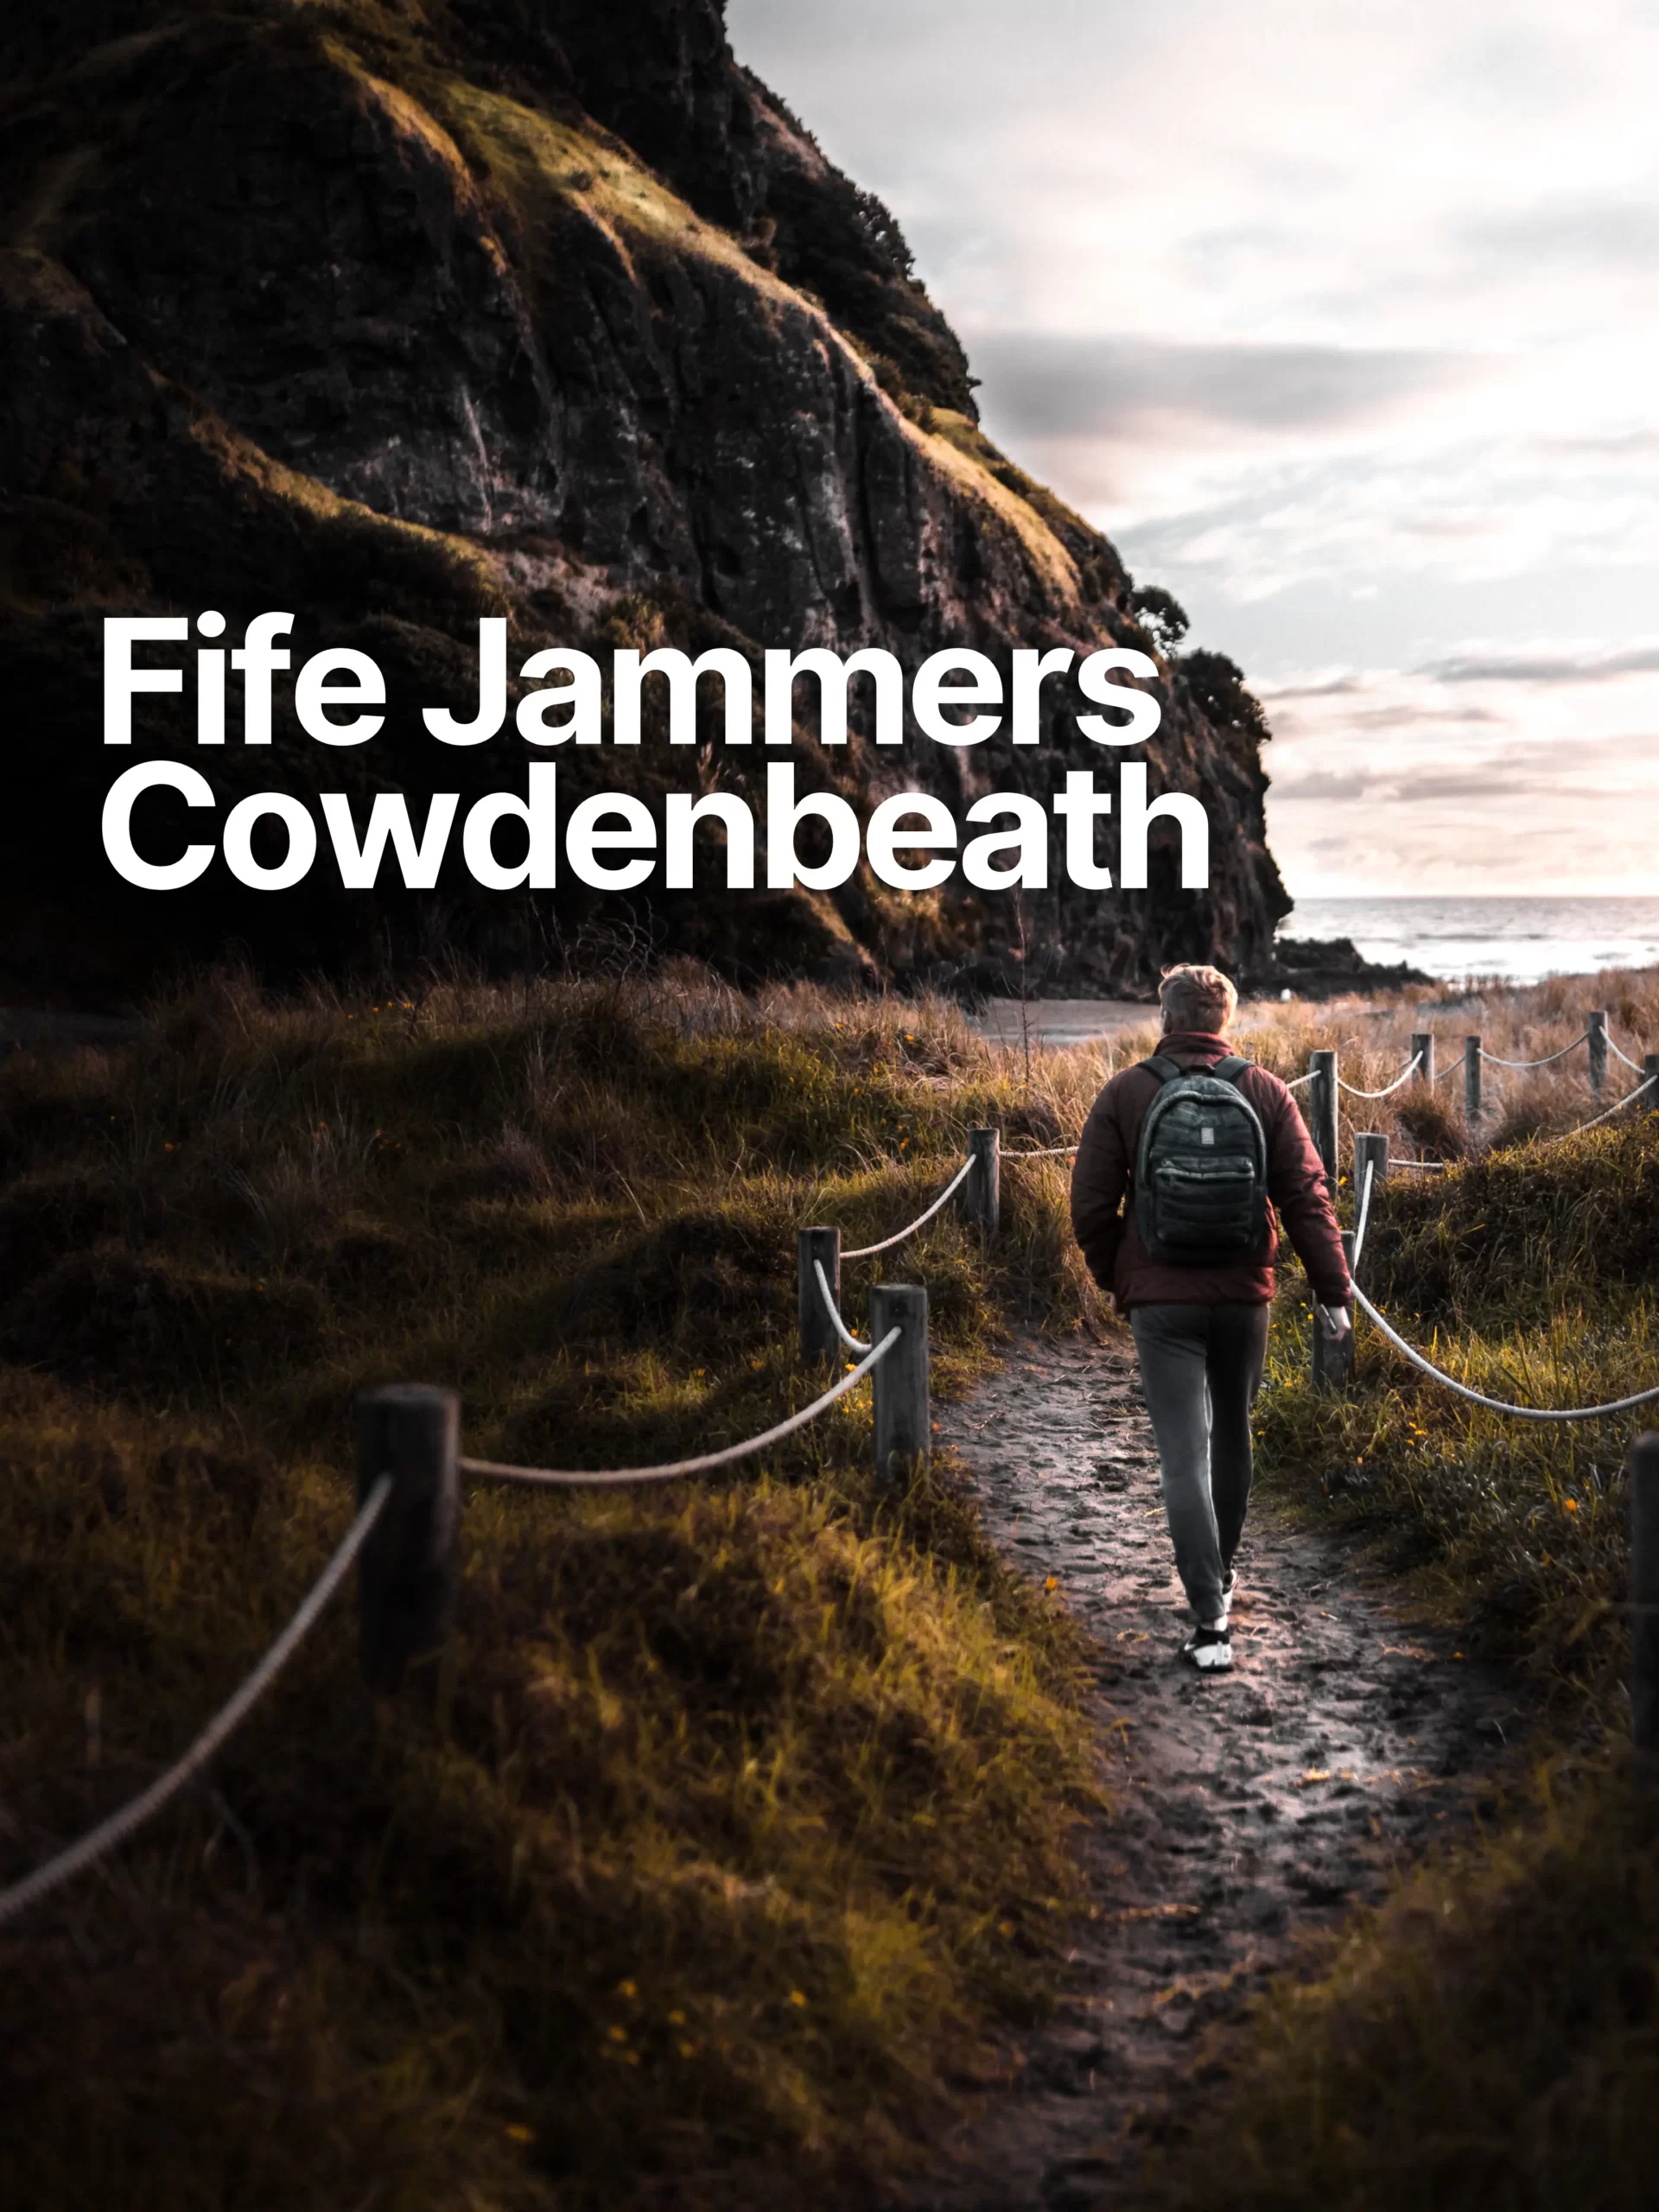 Fife Jammers Cowdenbeath